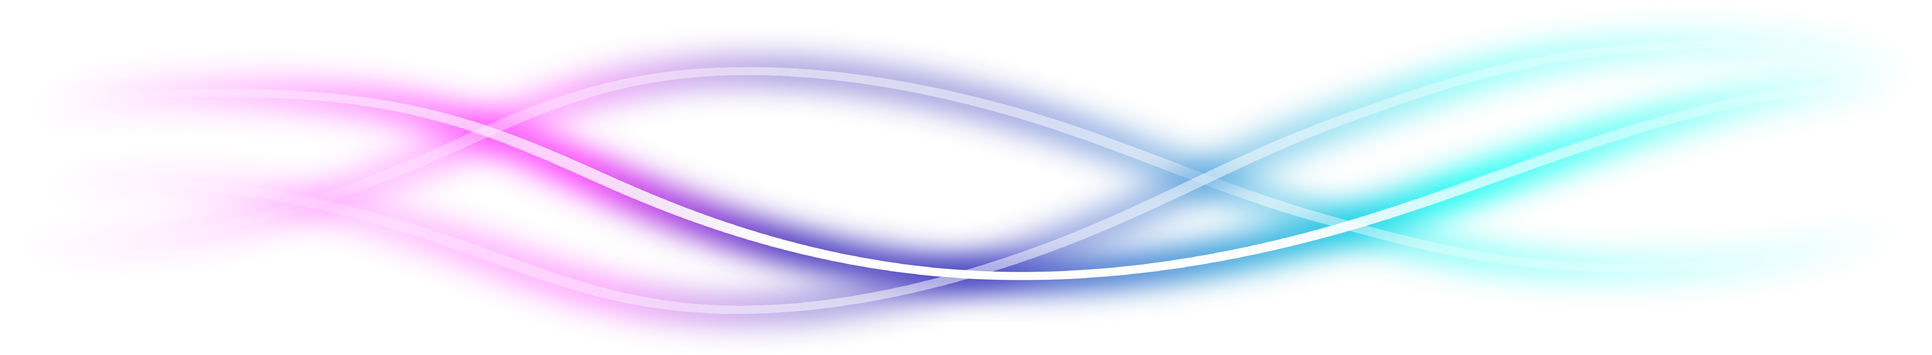 neon wave line light element icon illustration